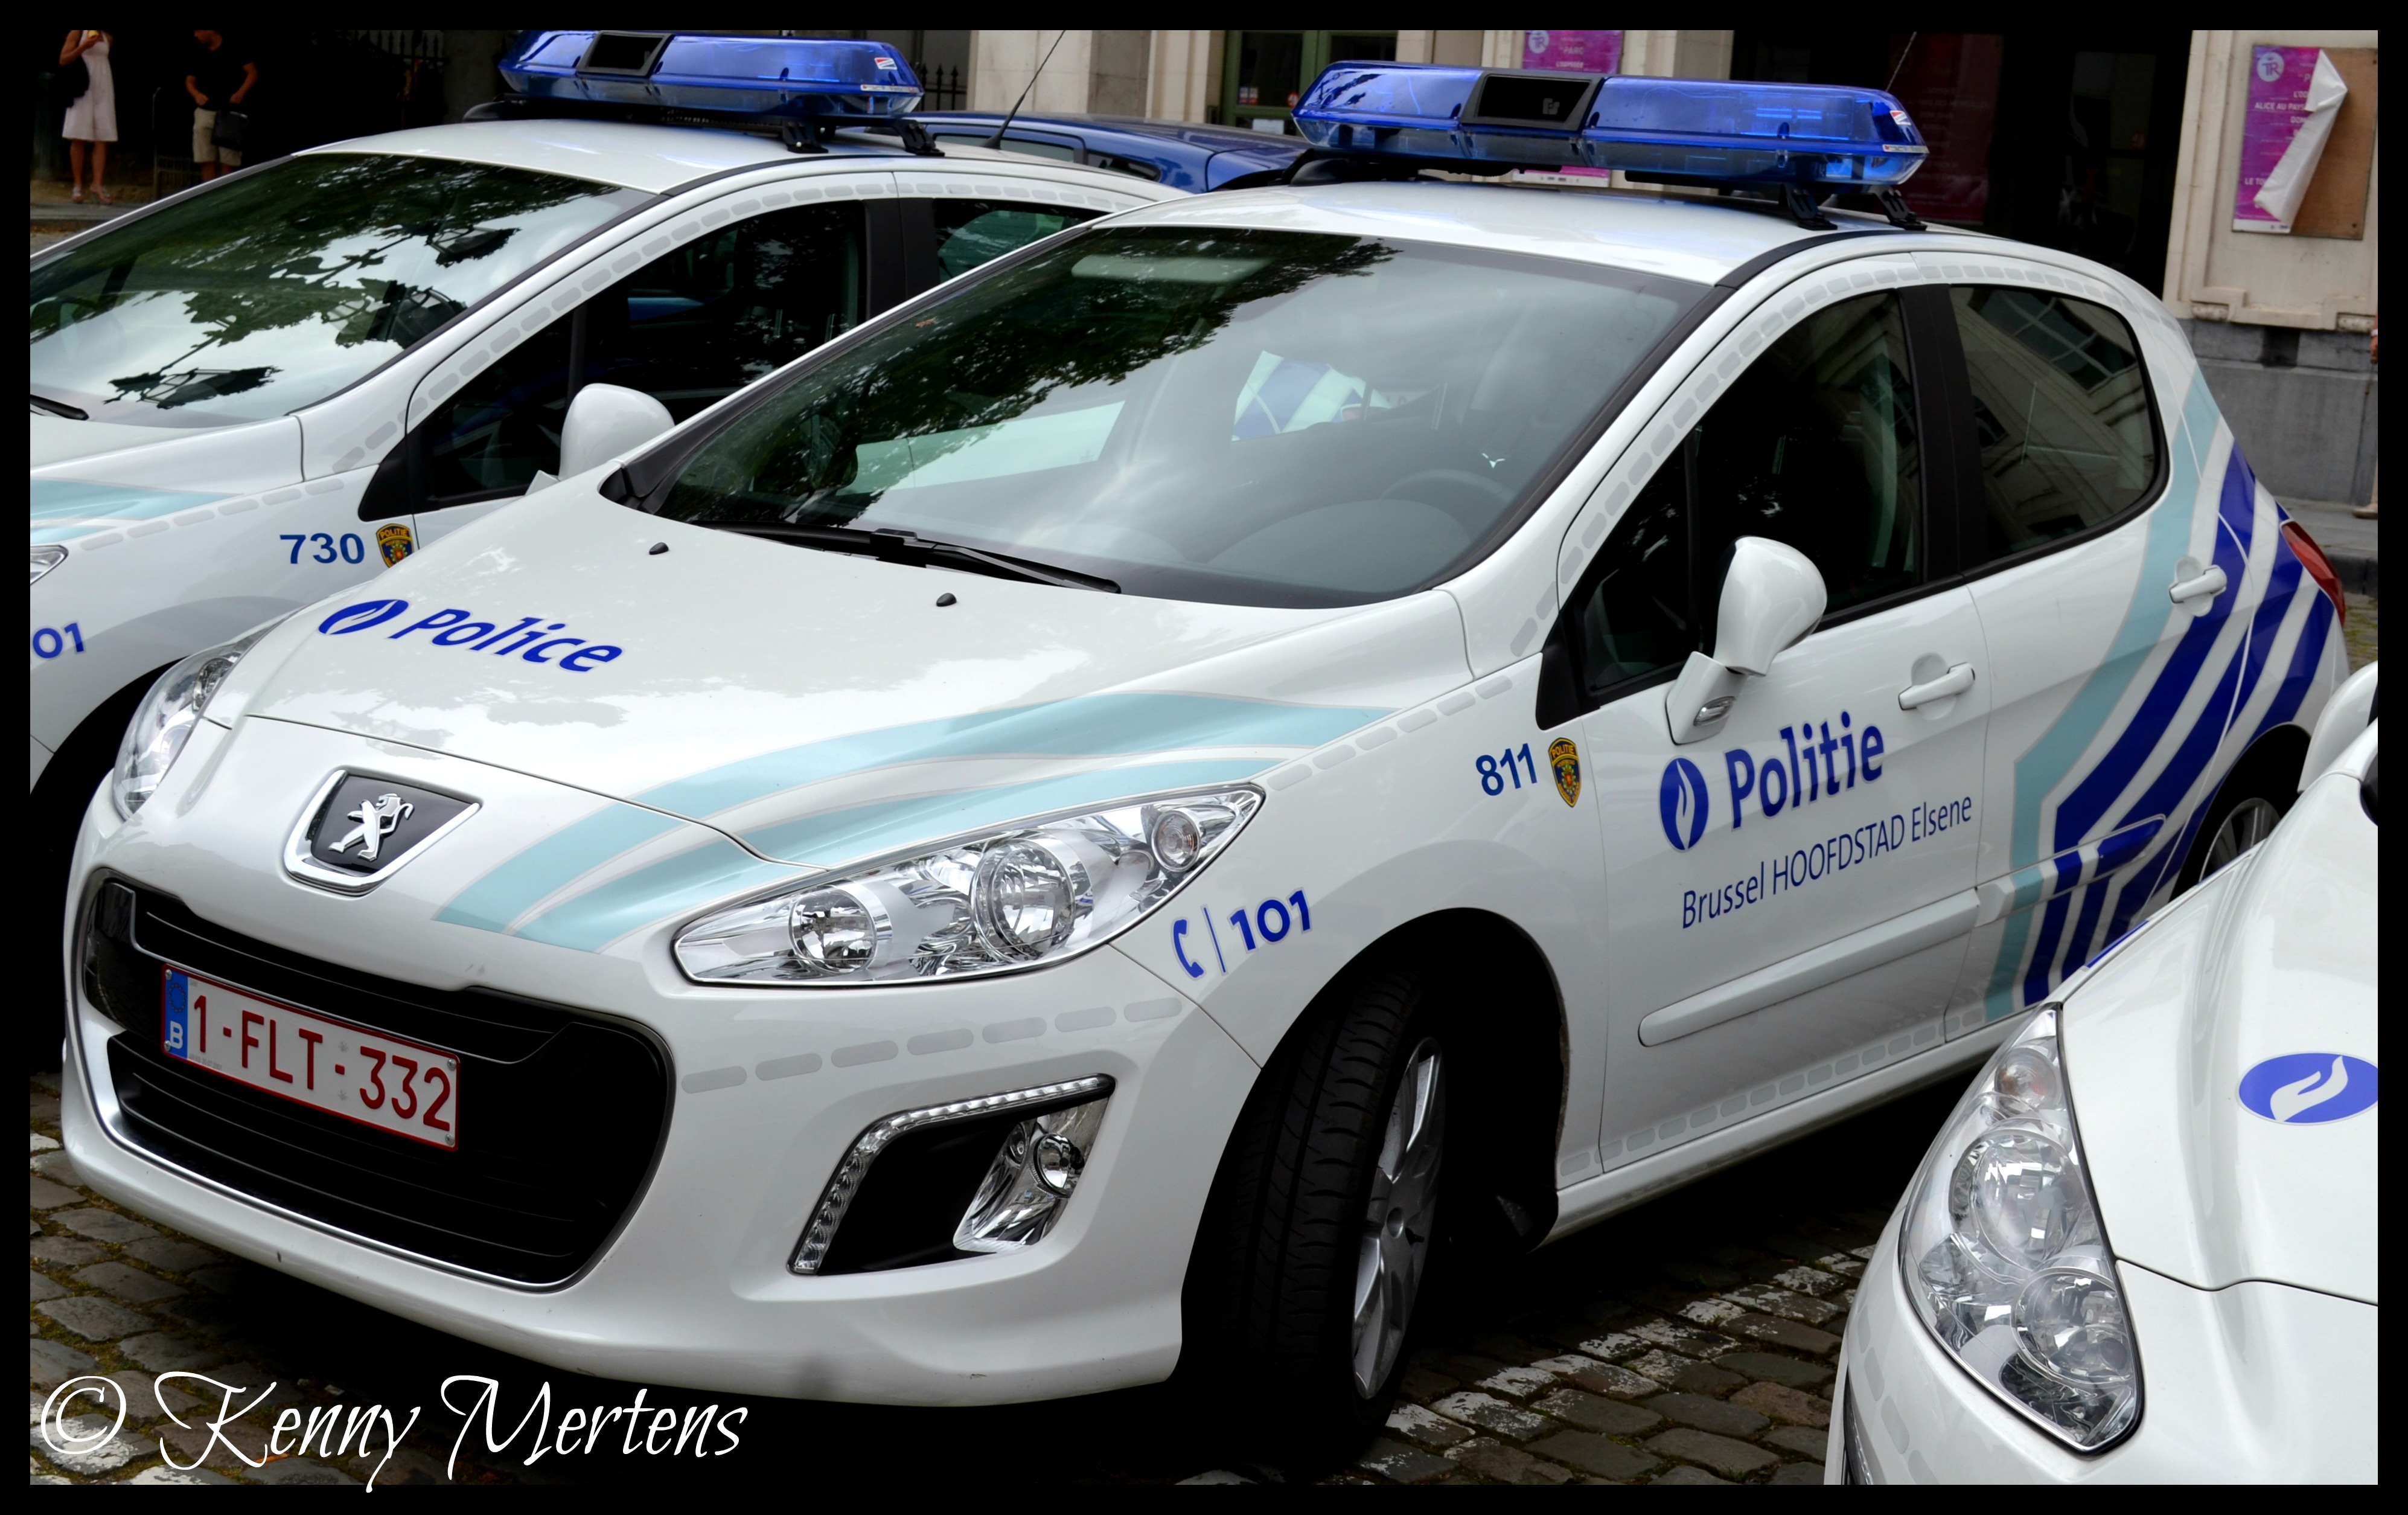 Zone de police Bruxelles Capitale Ixelles (ZP 5339 - PolBru) - Page 3 14807075376_da64a4f2ac_o